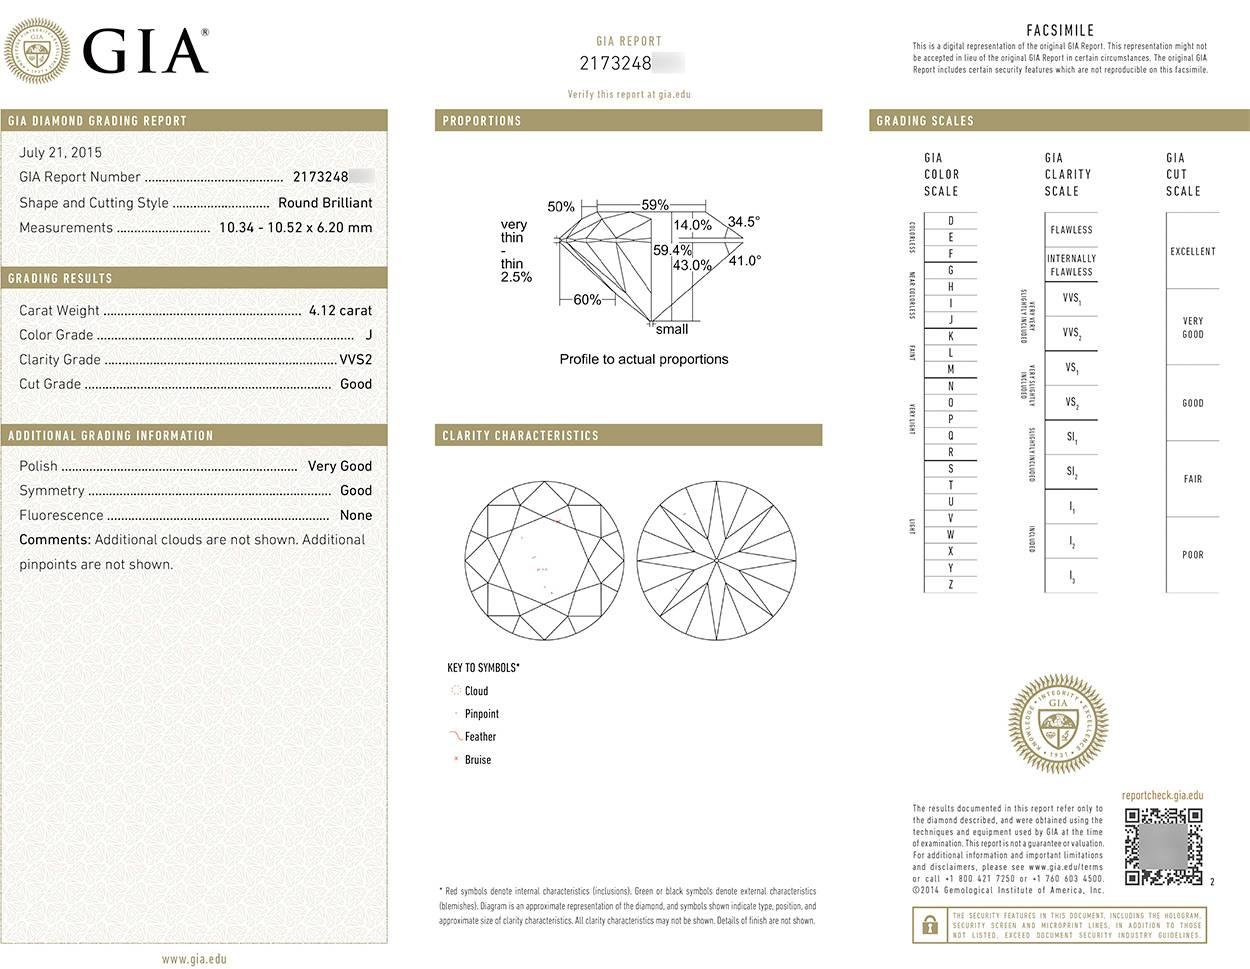 Boucheron GIA Certified Diamond and 18 Karat Gold Solitaire Ring 4.12 Carat 2